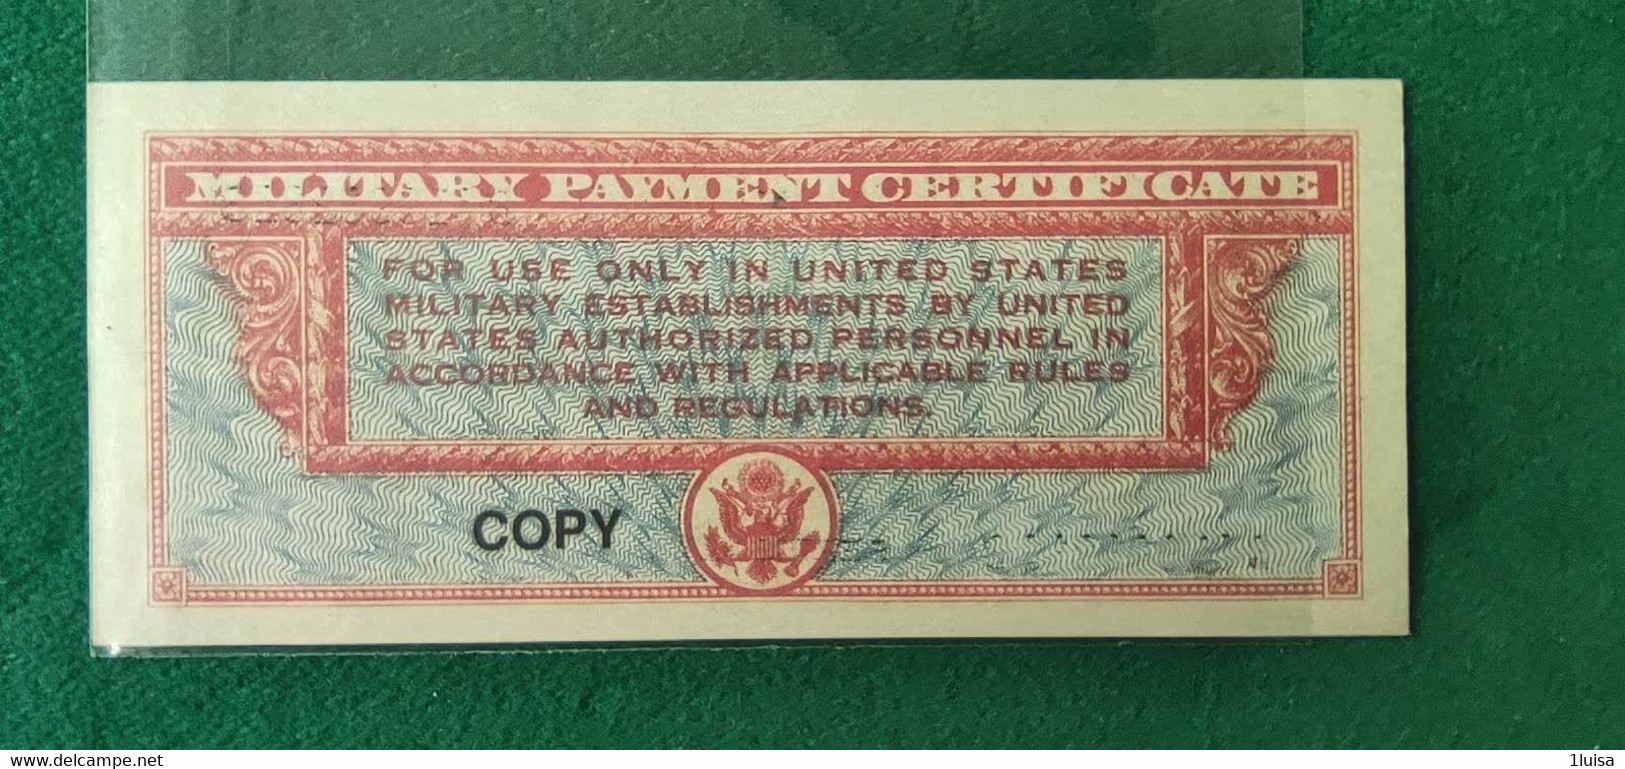 STATI UNITI 10 Dollars Serie 471 COPY - 1947-1948 - Series 471